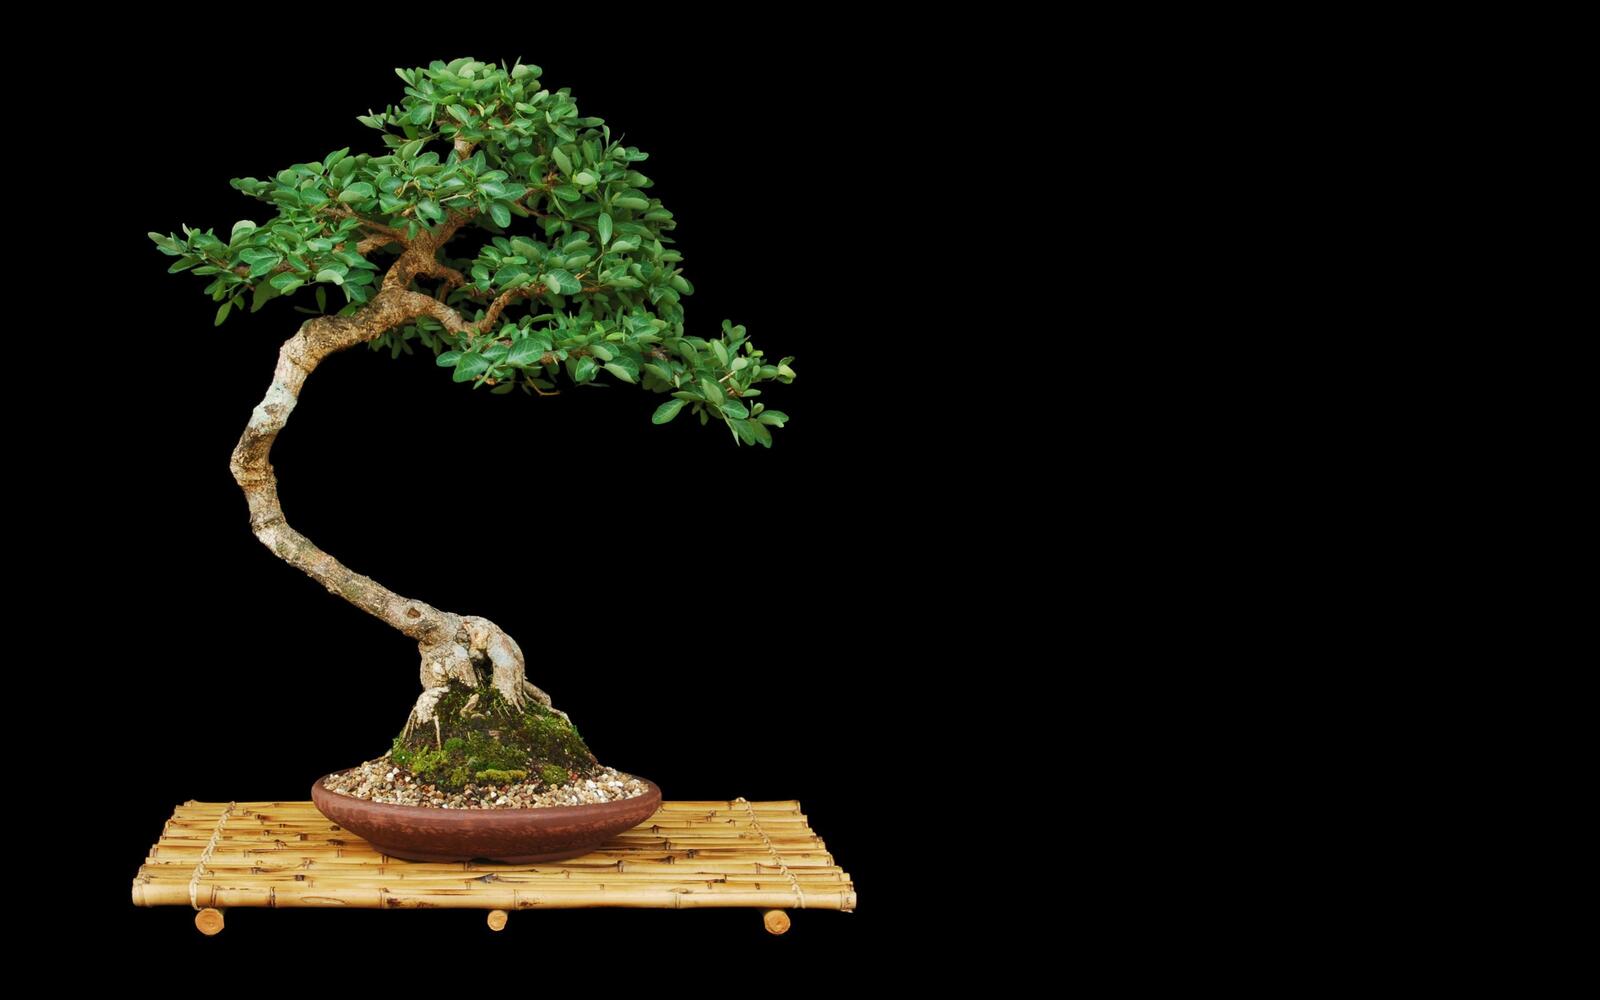 Free photo The bonsai on a black background